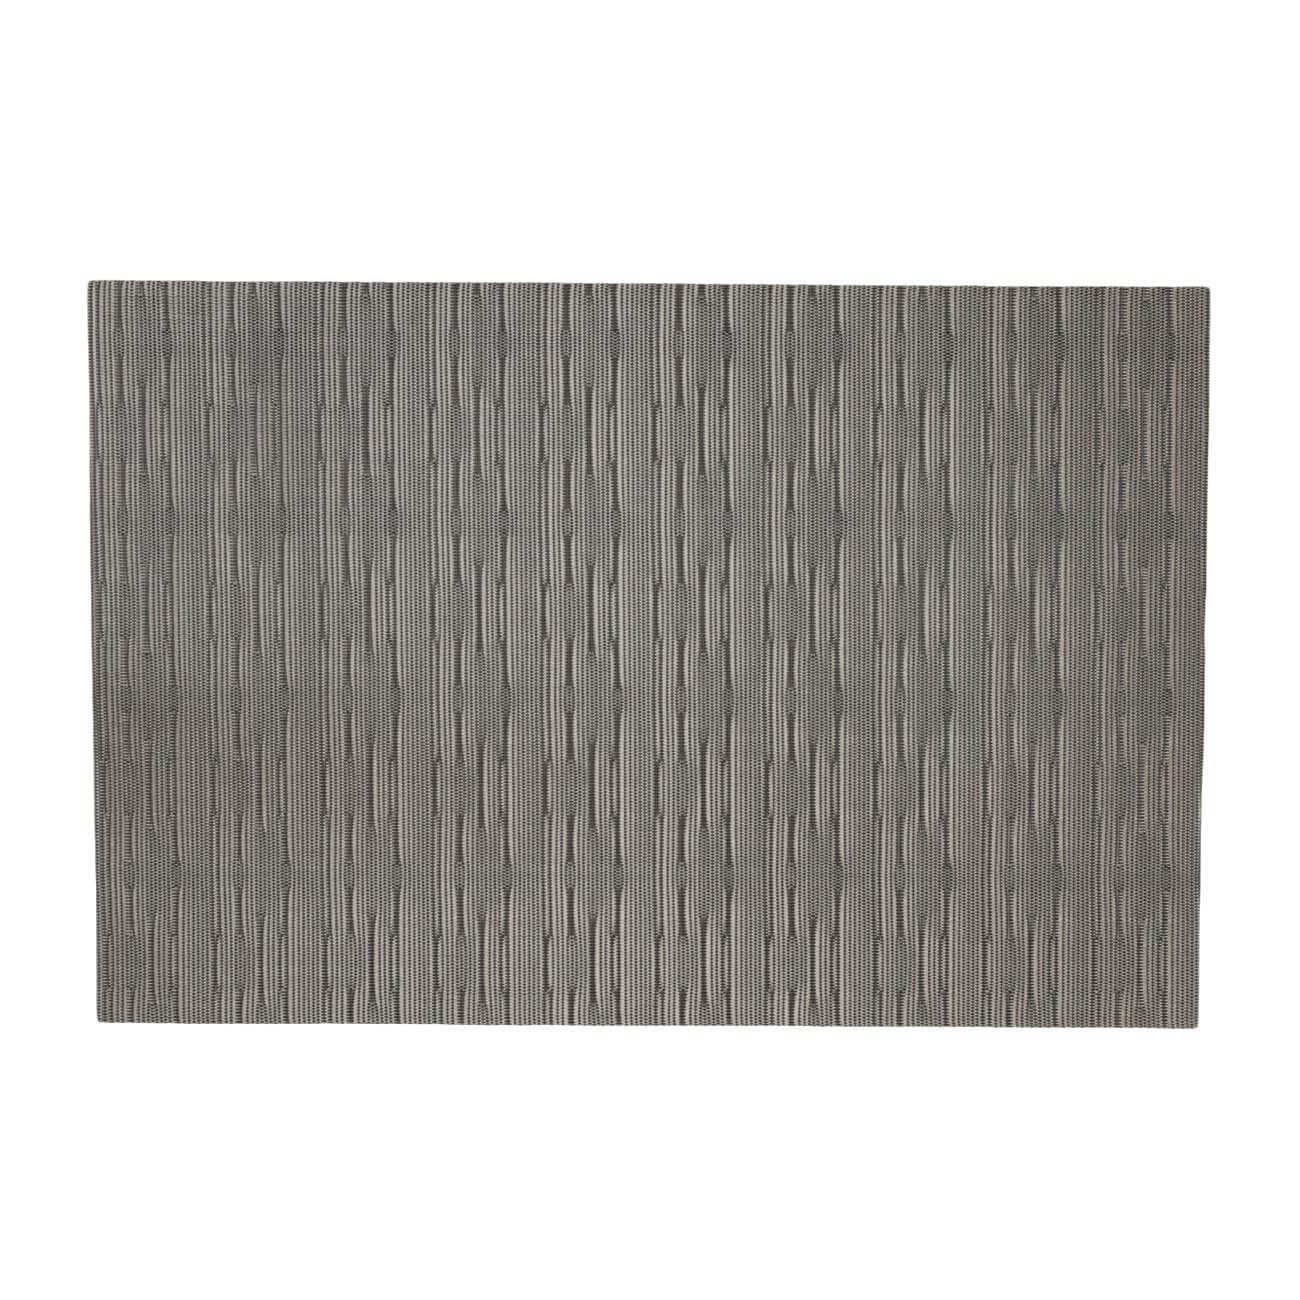 Napkin for appliances, 30x45 cm, PVC / polyester, rectangular, beige, Strokes, Solid изображение № 1